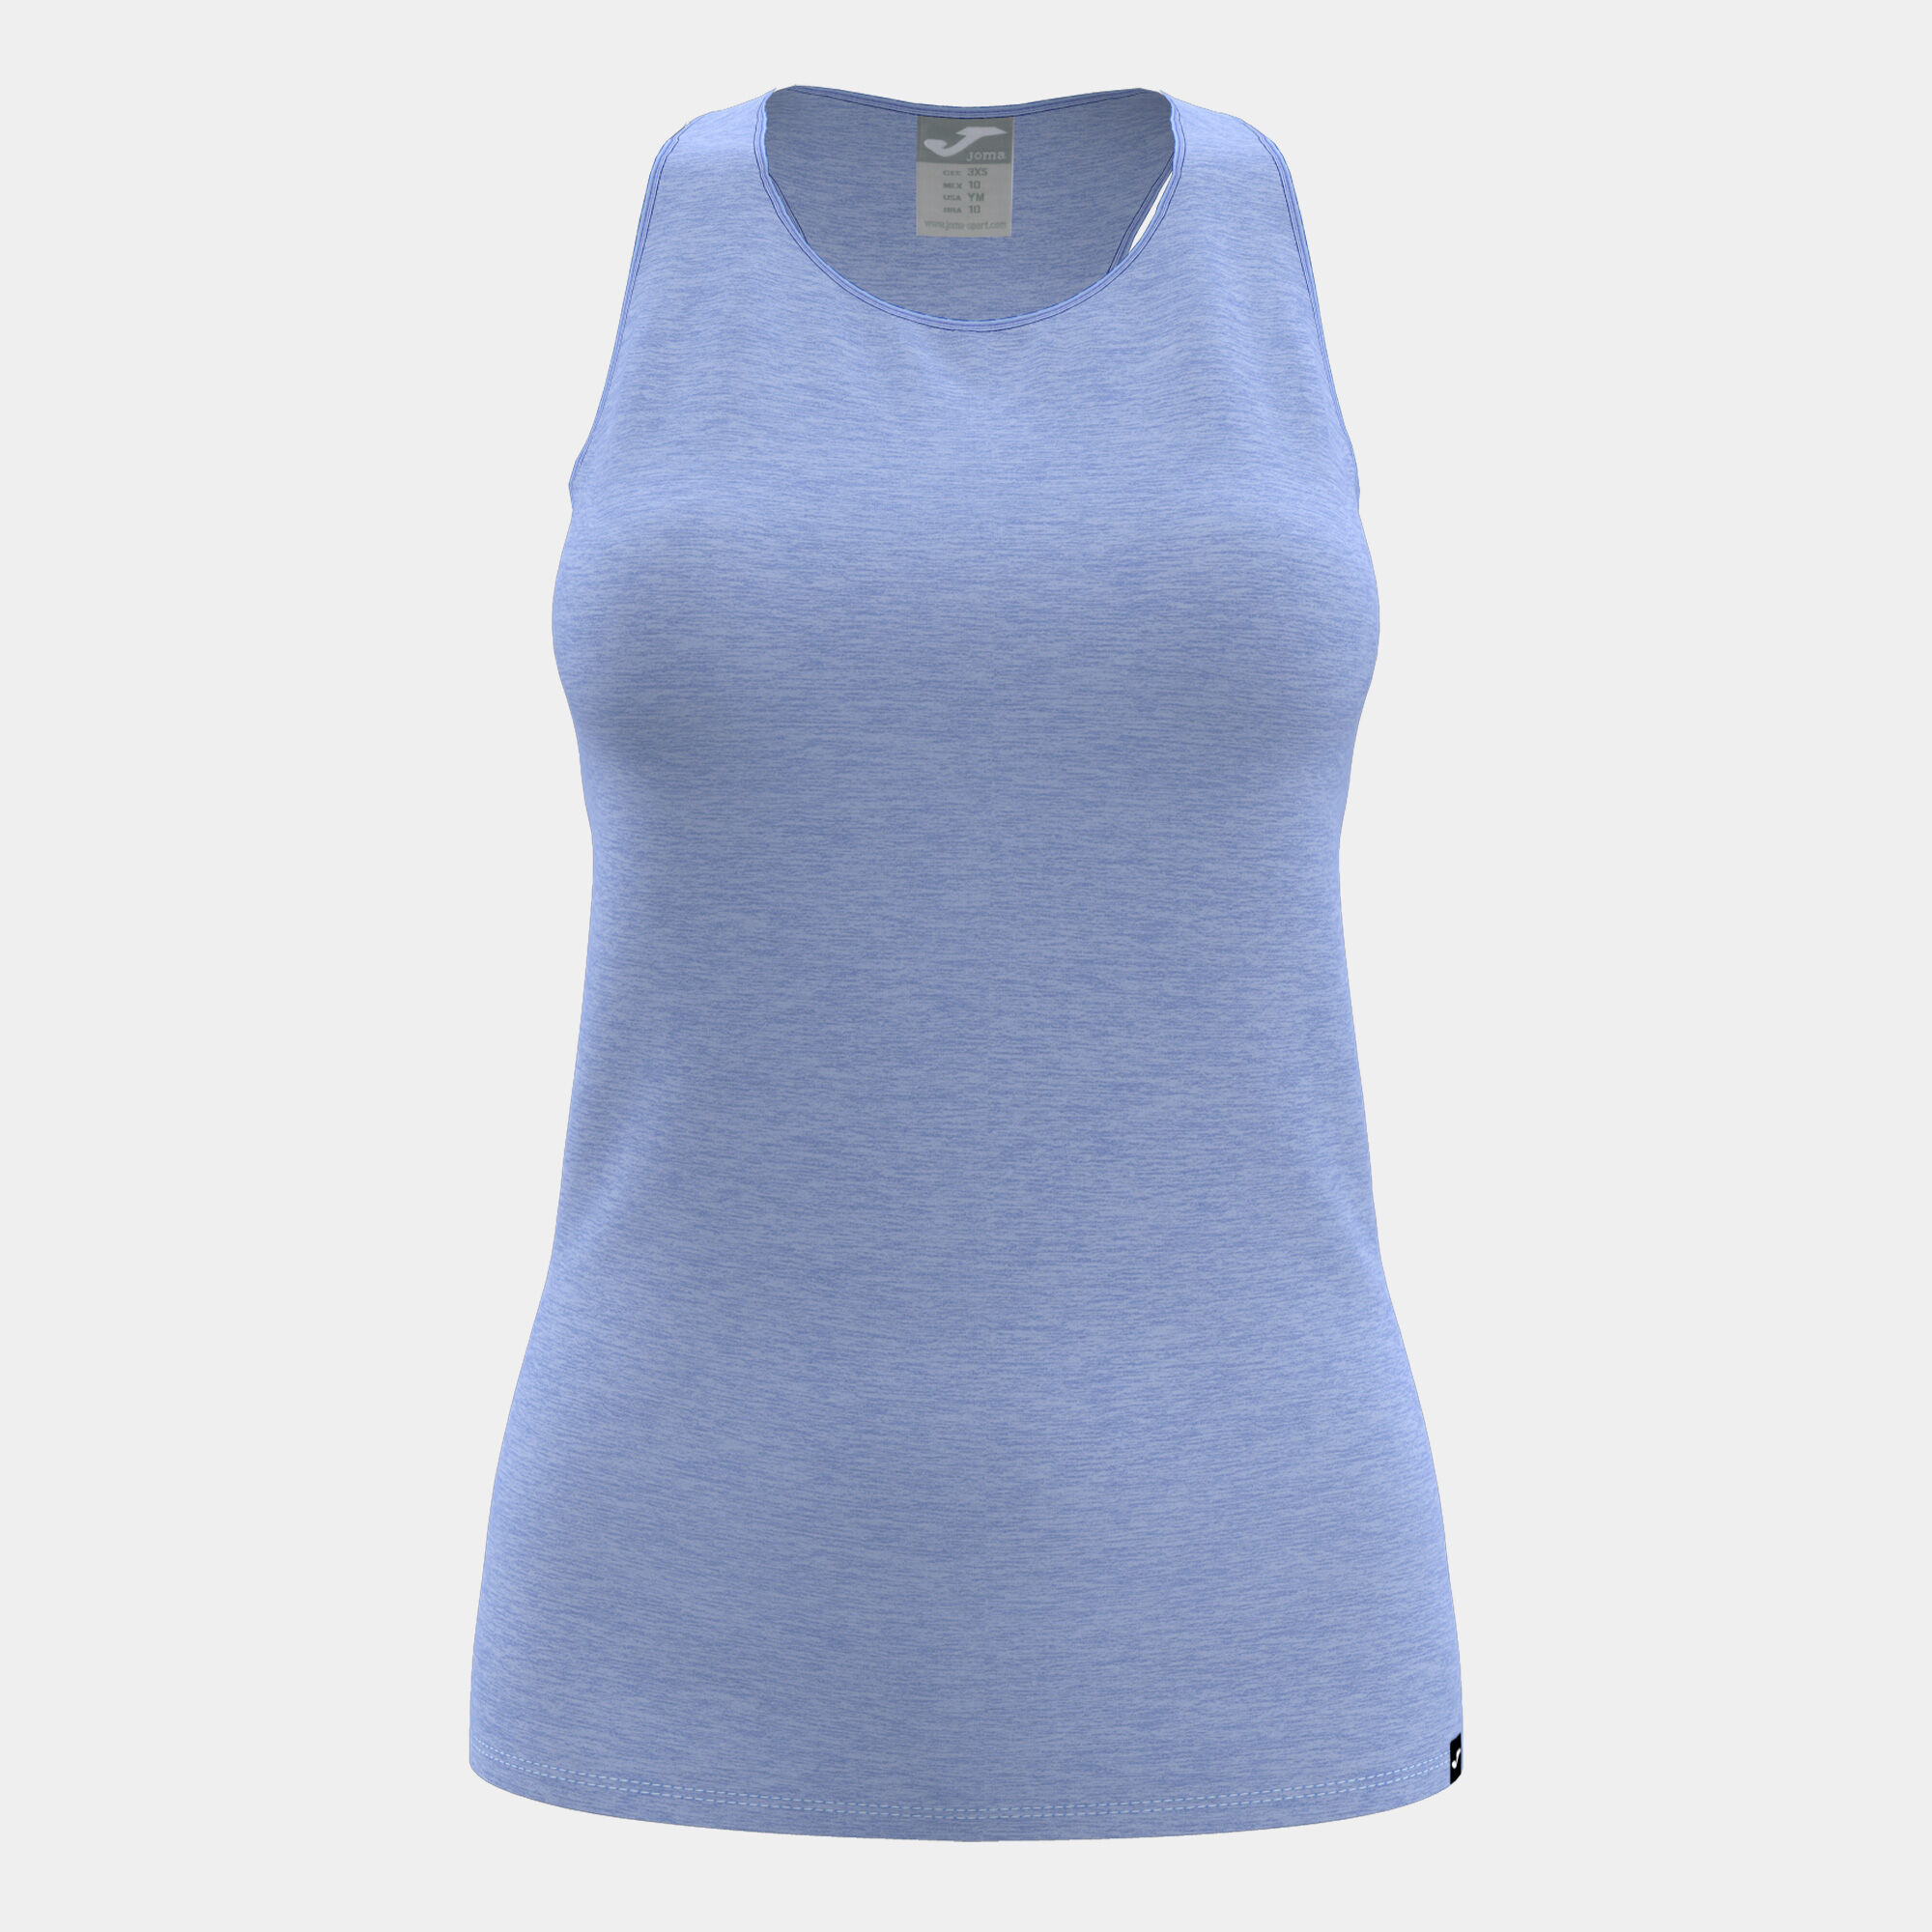 Camiseta tirantes mujer Oasis azul